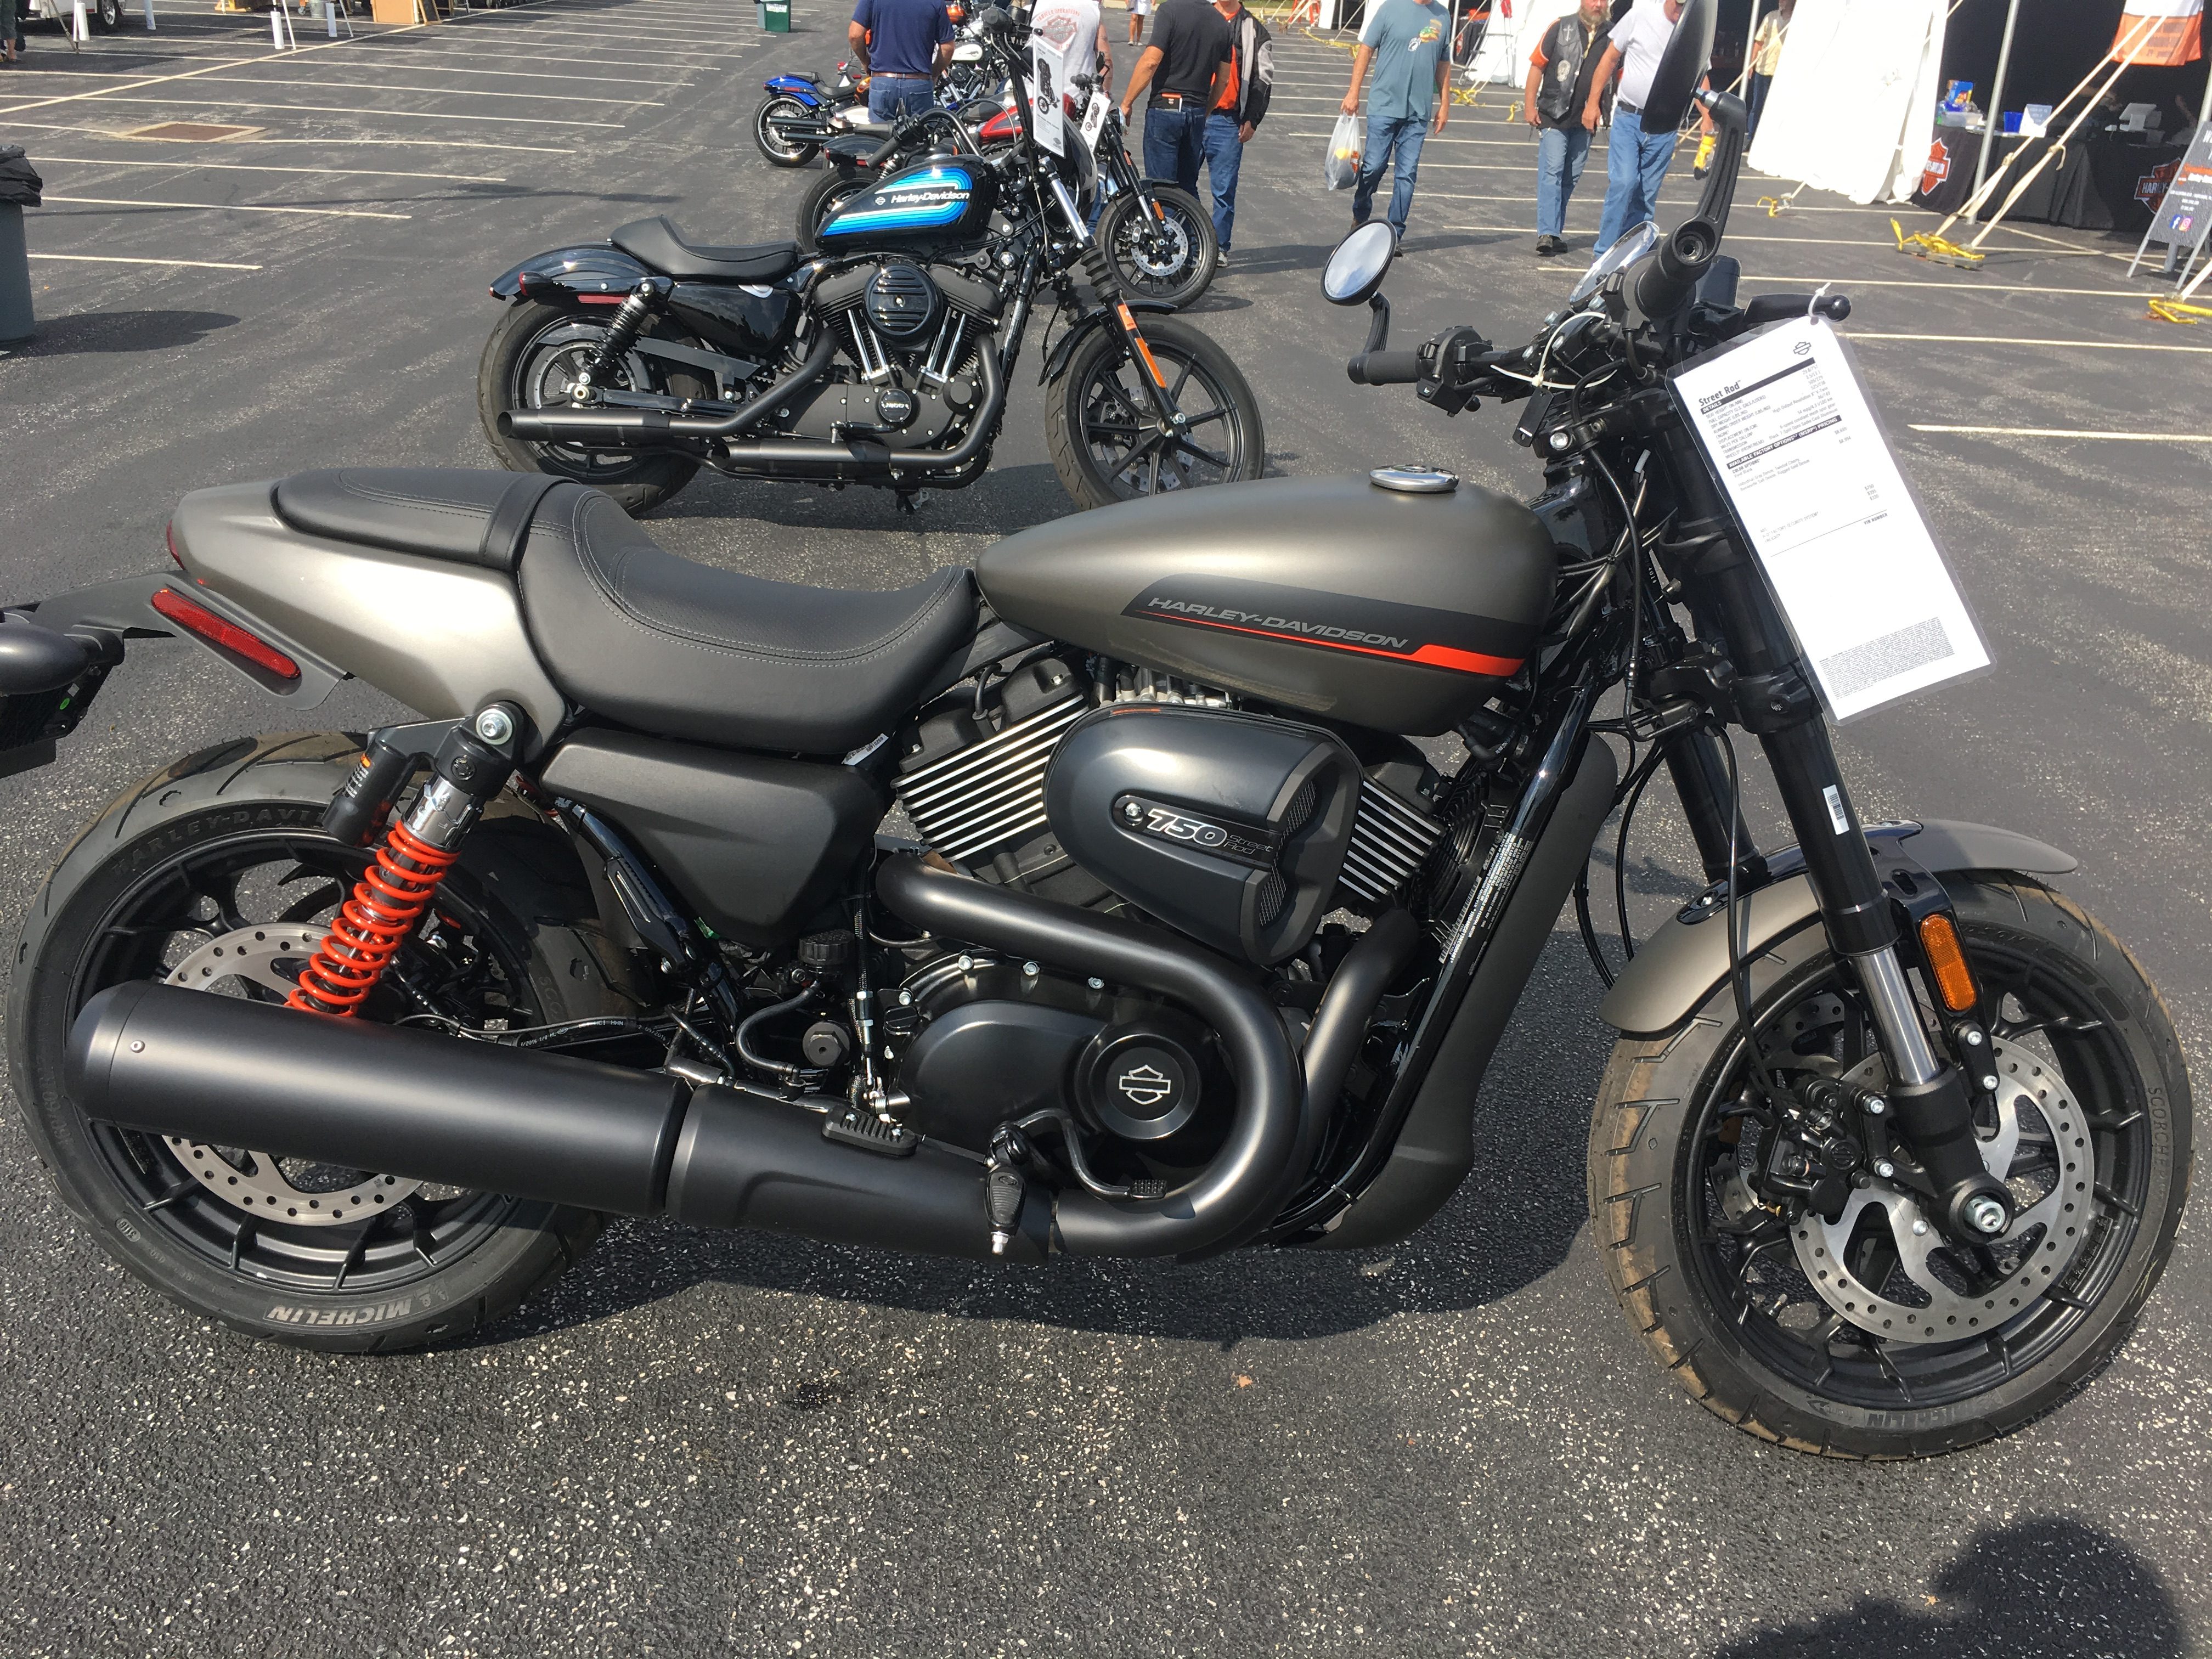 2019 Harley-Davidson Street Rod - $8,699